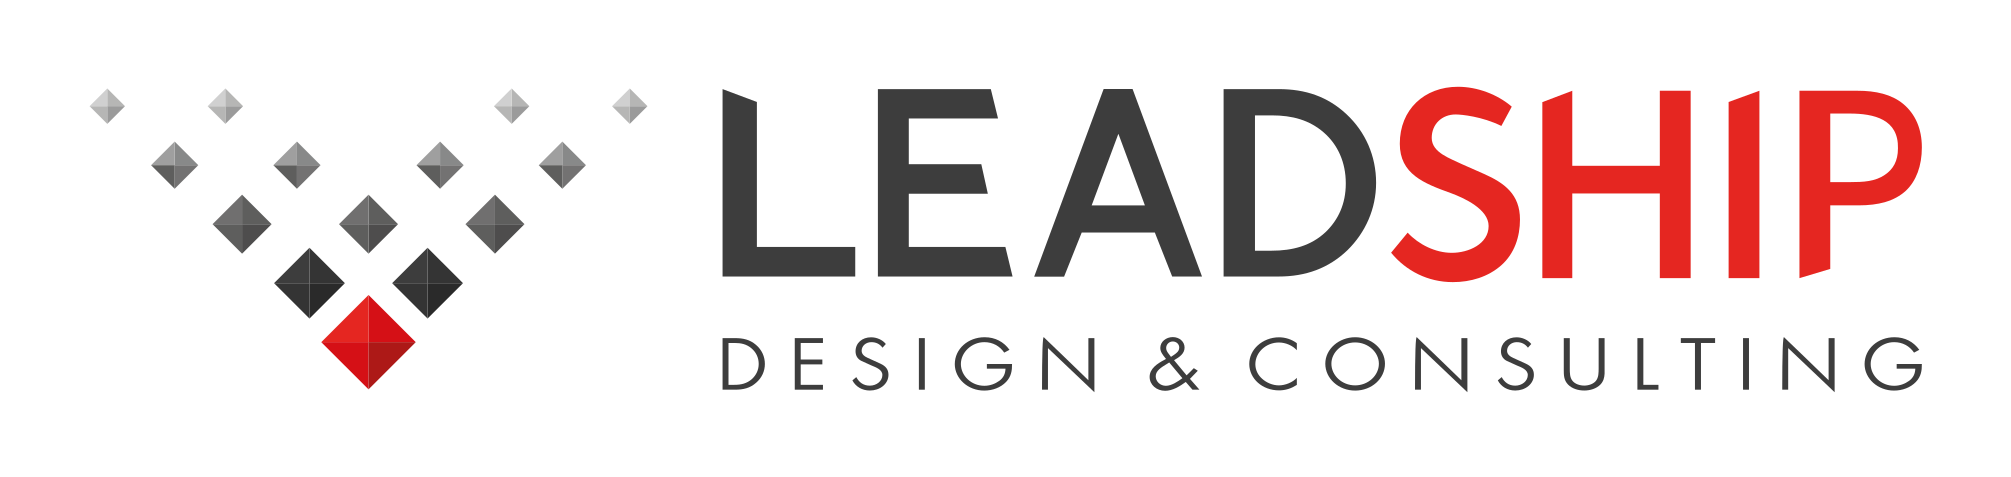 Lead Ship Design & Consulting